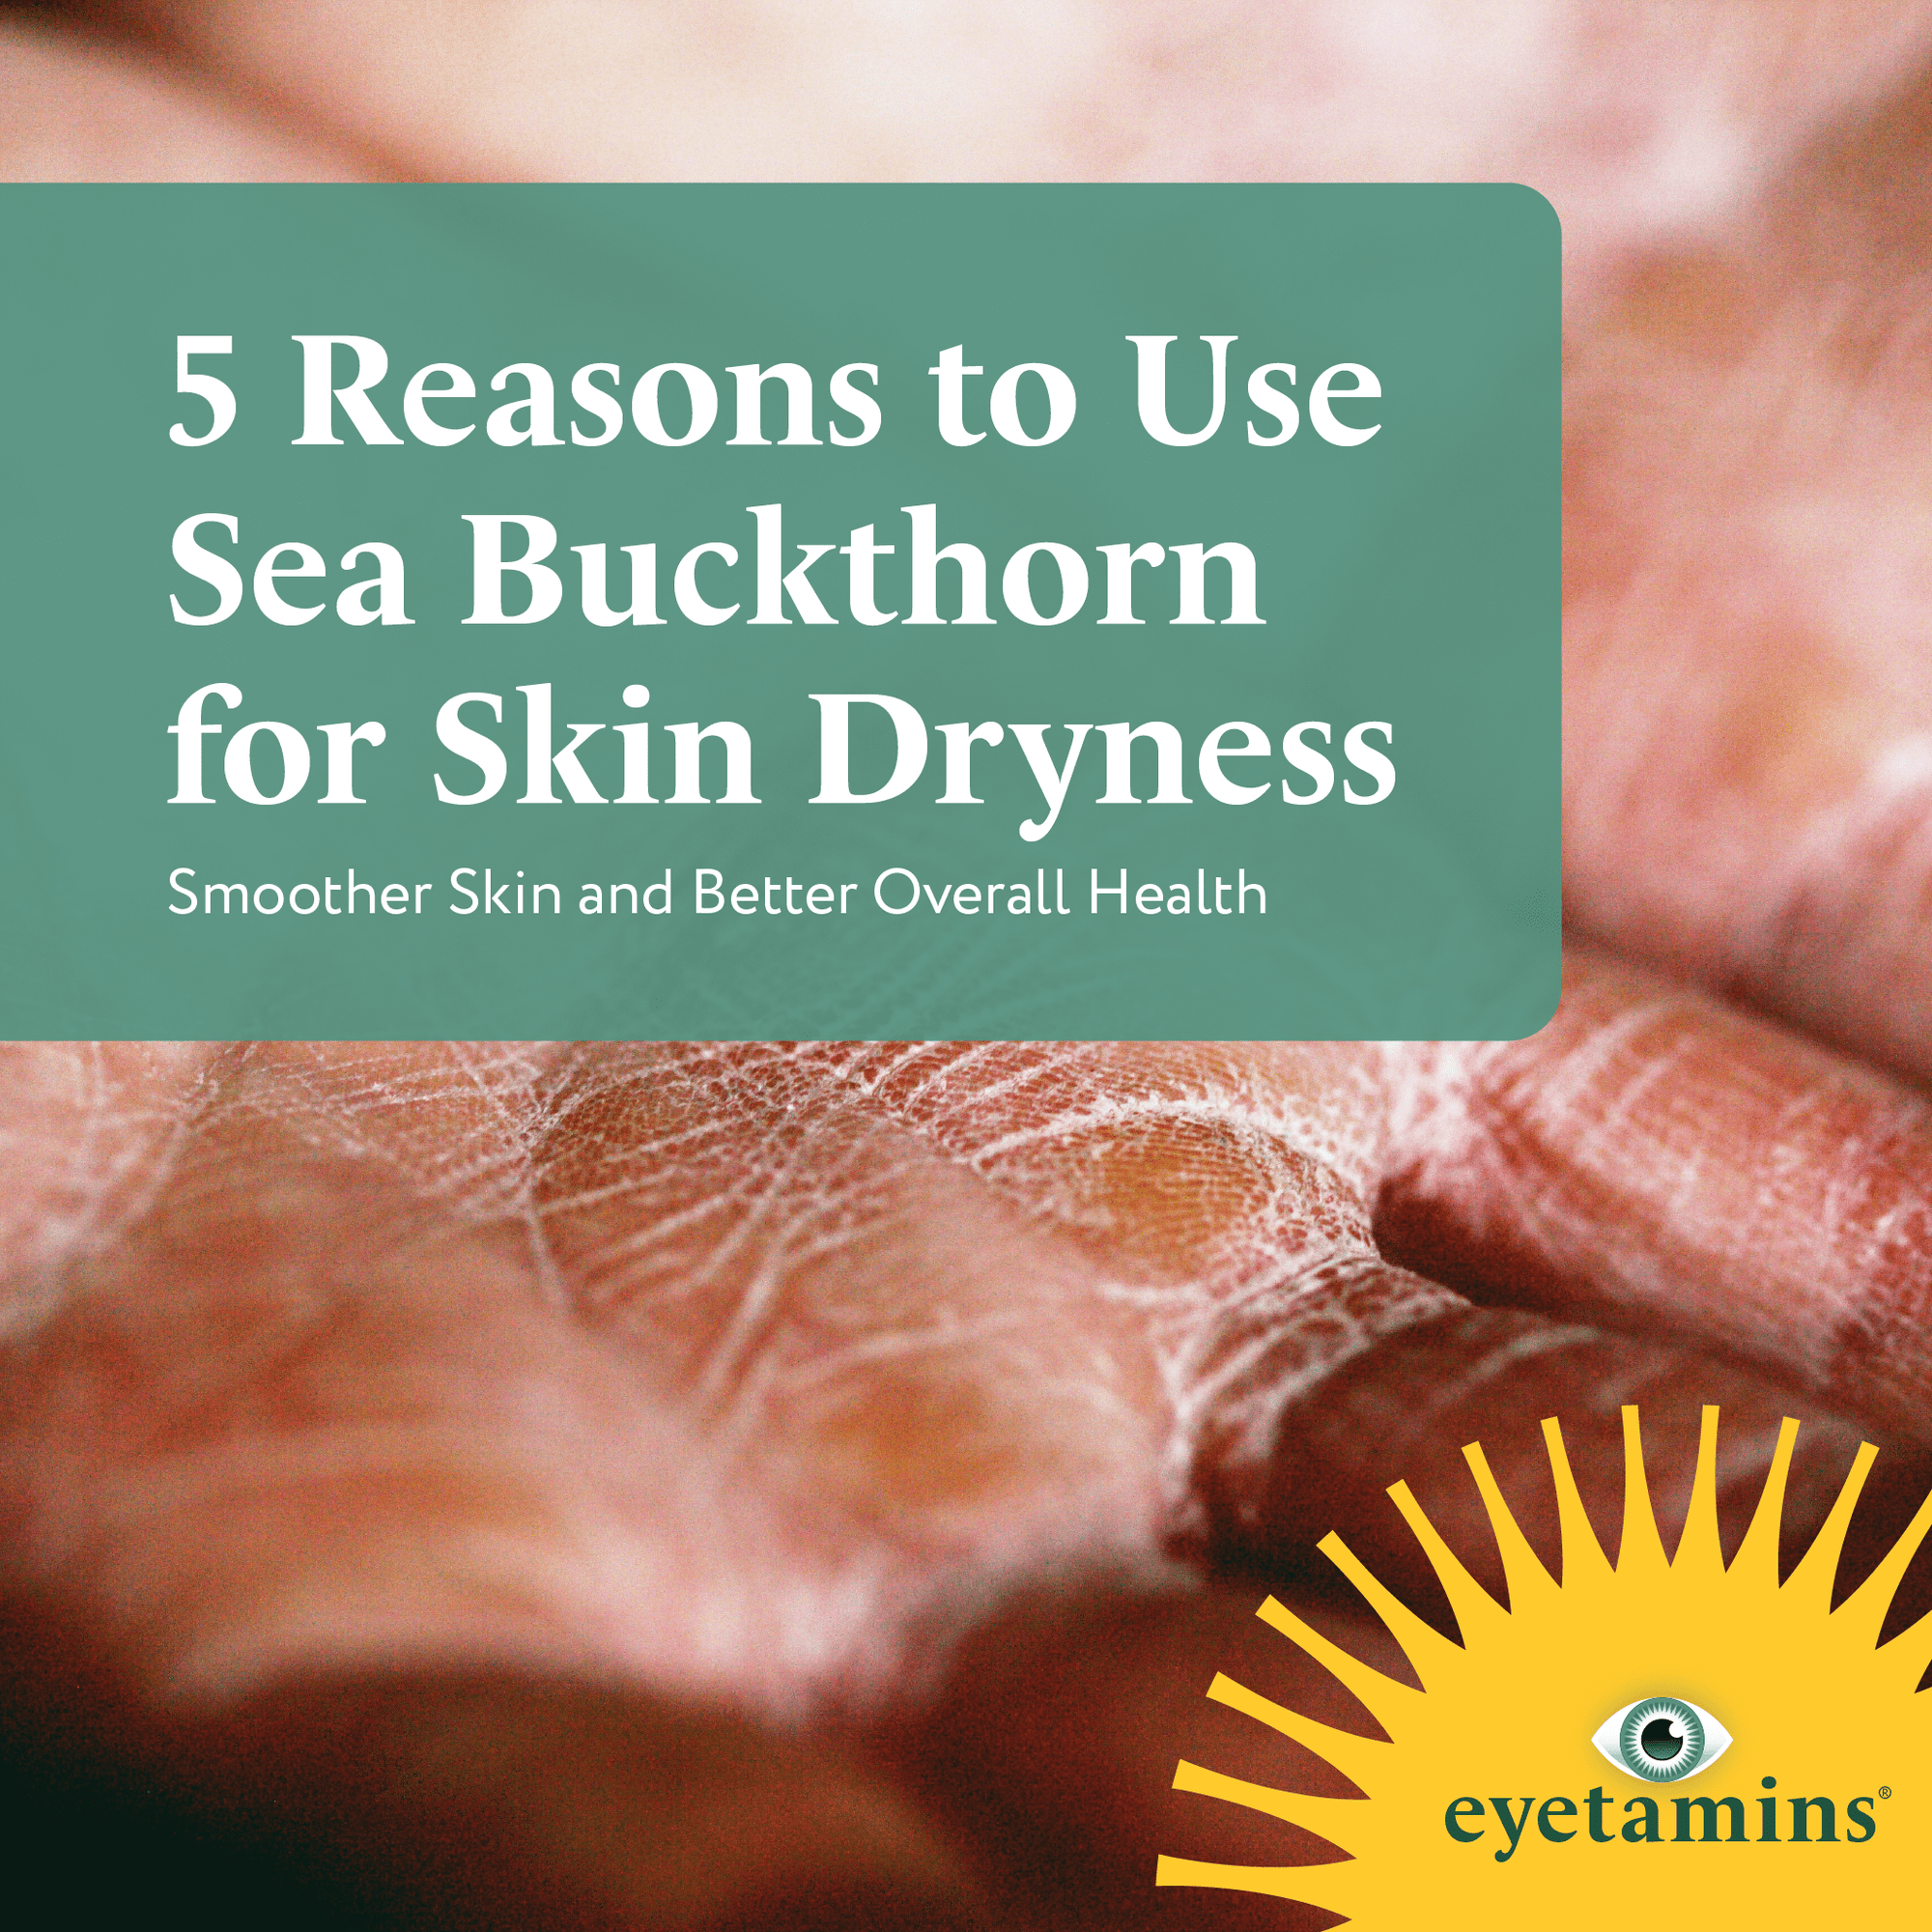 Eyetamins - 5 Reasons to Use Sea Buckthorn for Skin Dryness